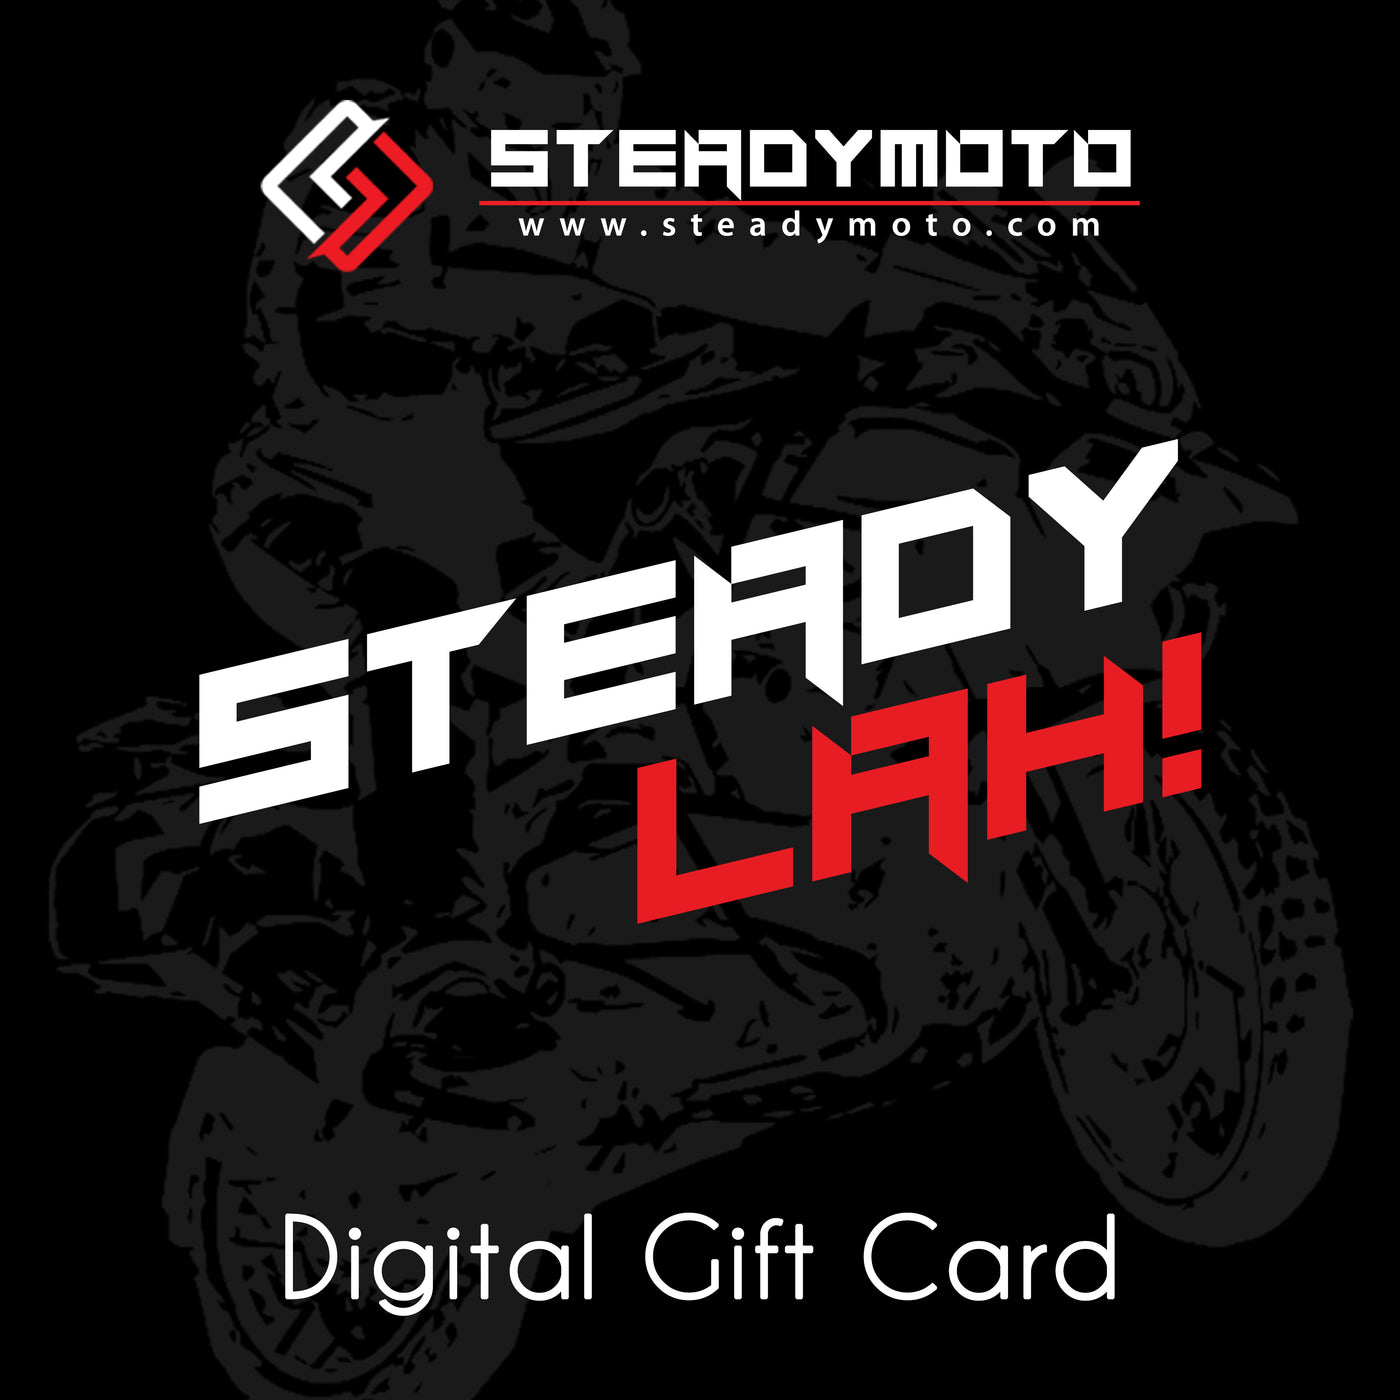 STEADY! Digital Gift Card